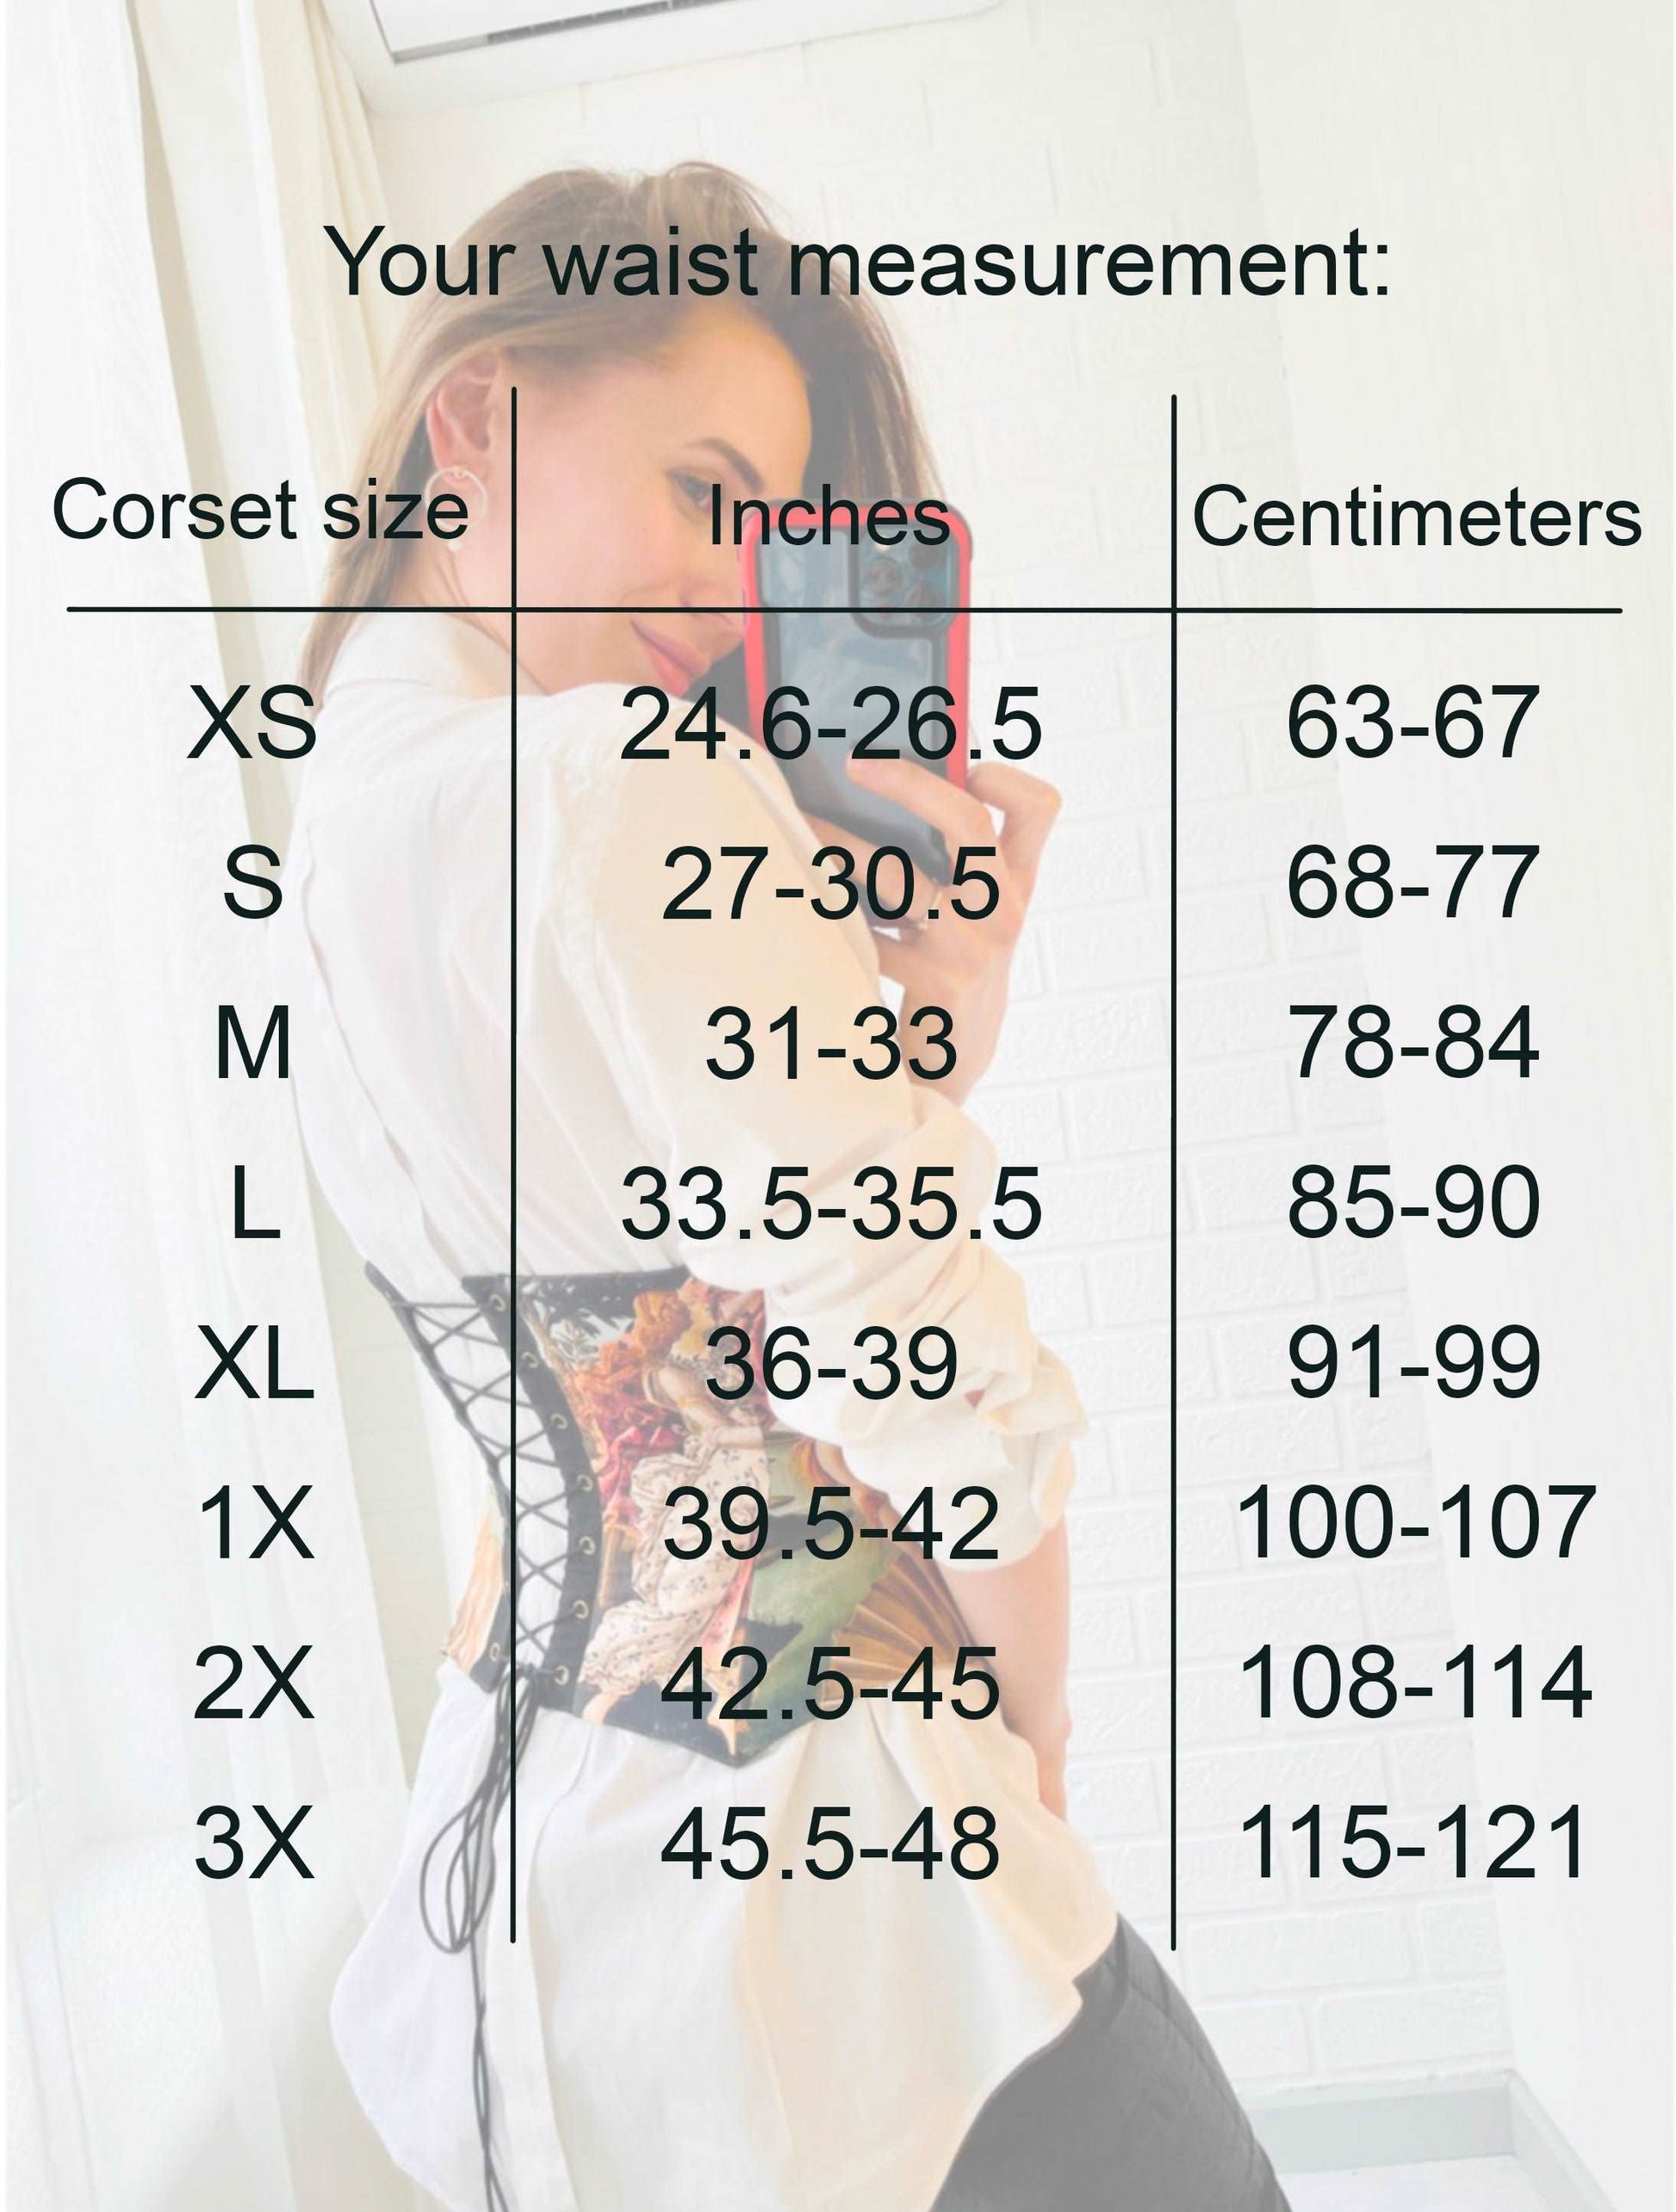 Corset size chart with waist measurement